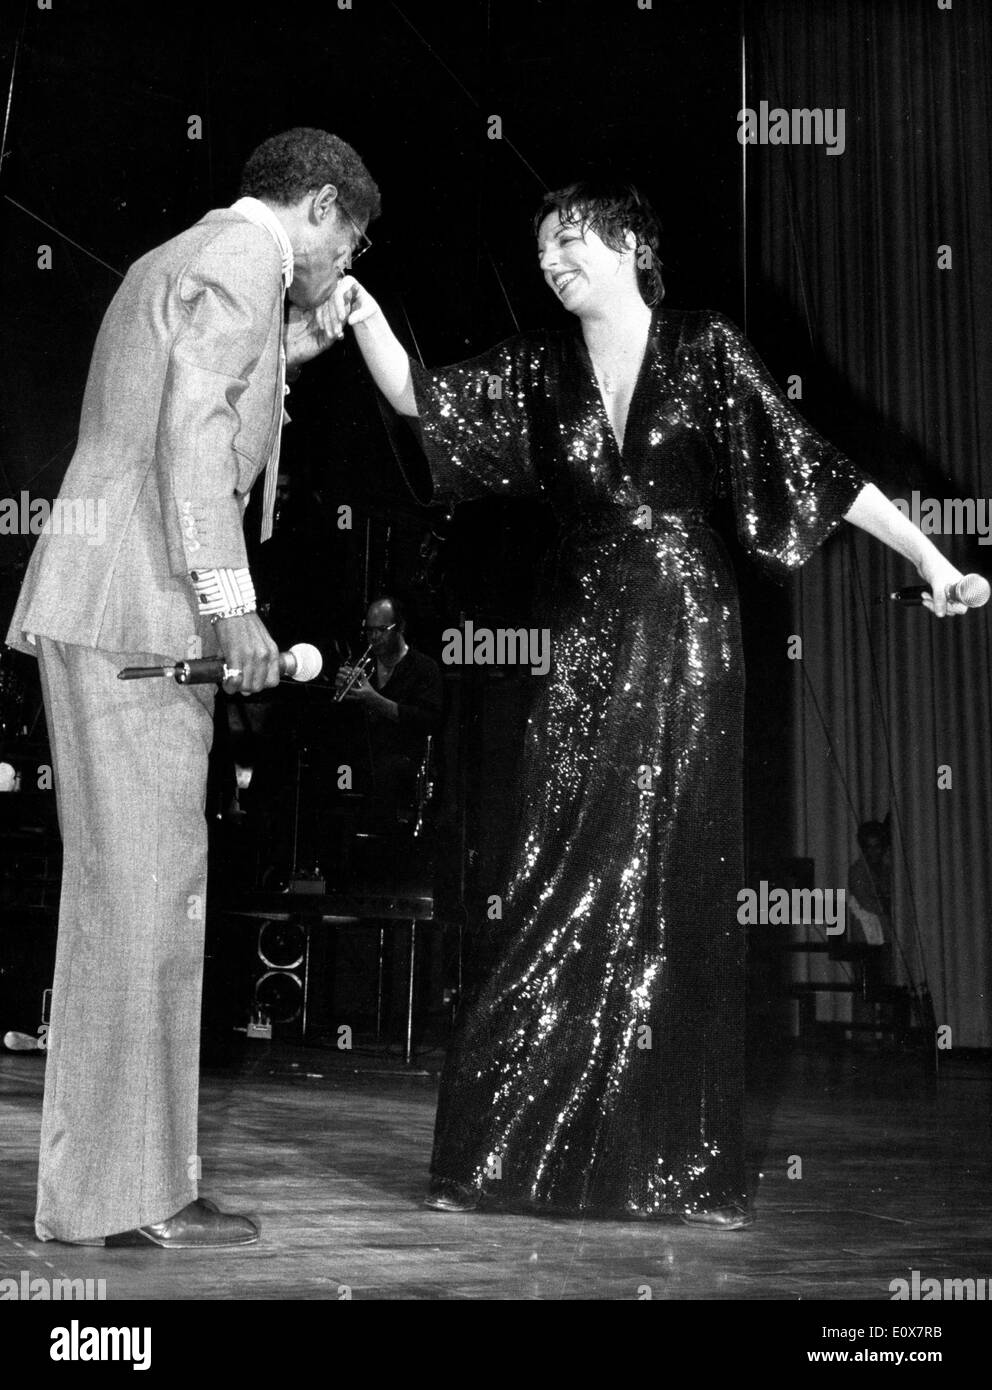 Sammy Davis Jr. with Liza Minnelli during a performance Stock Photo